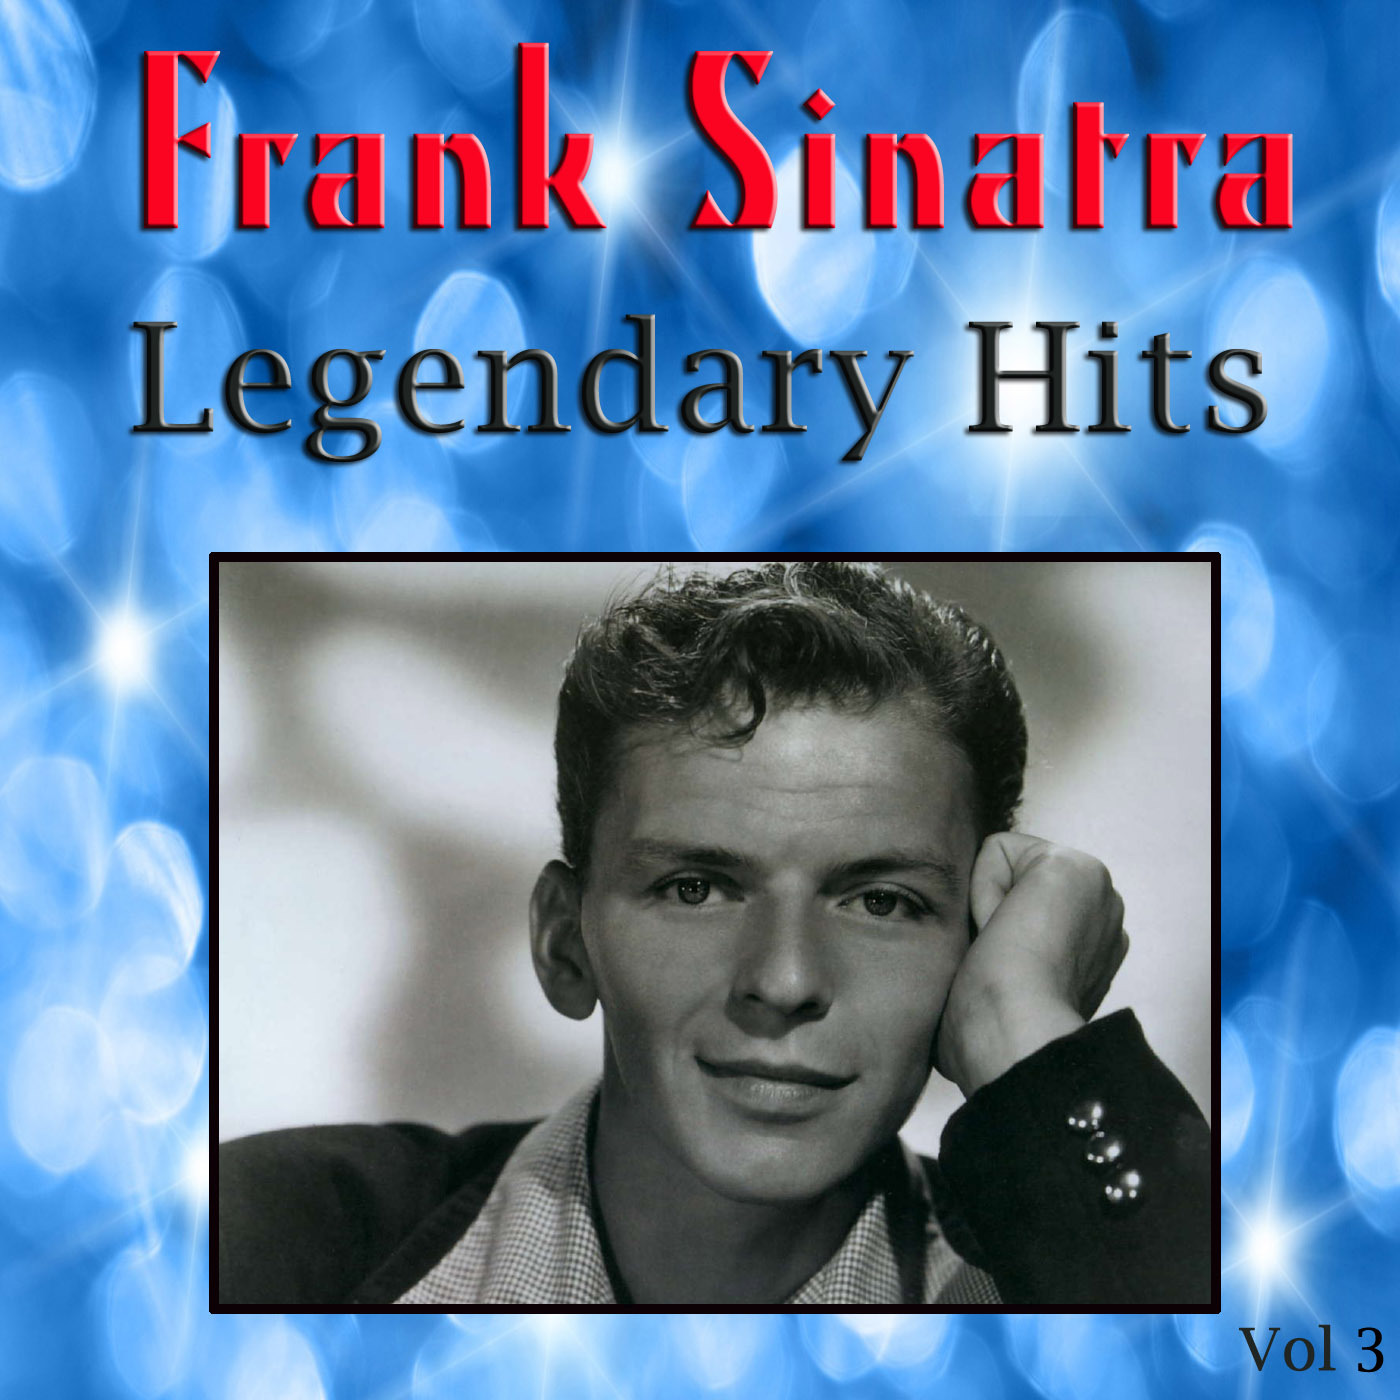 Frank Sinatra Legendary Hits Vol 3